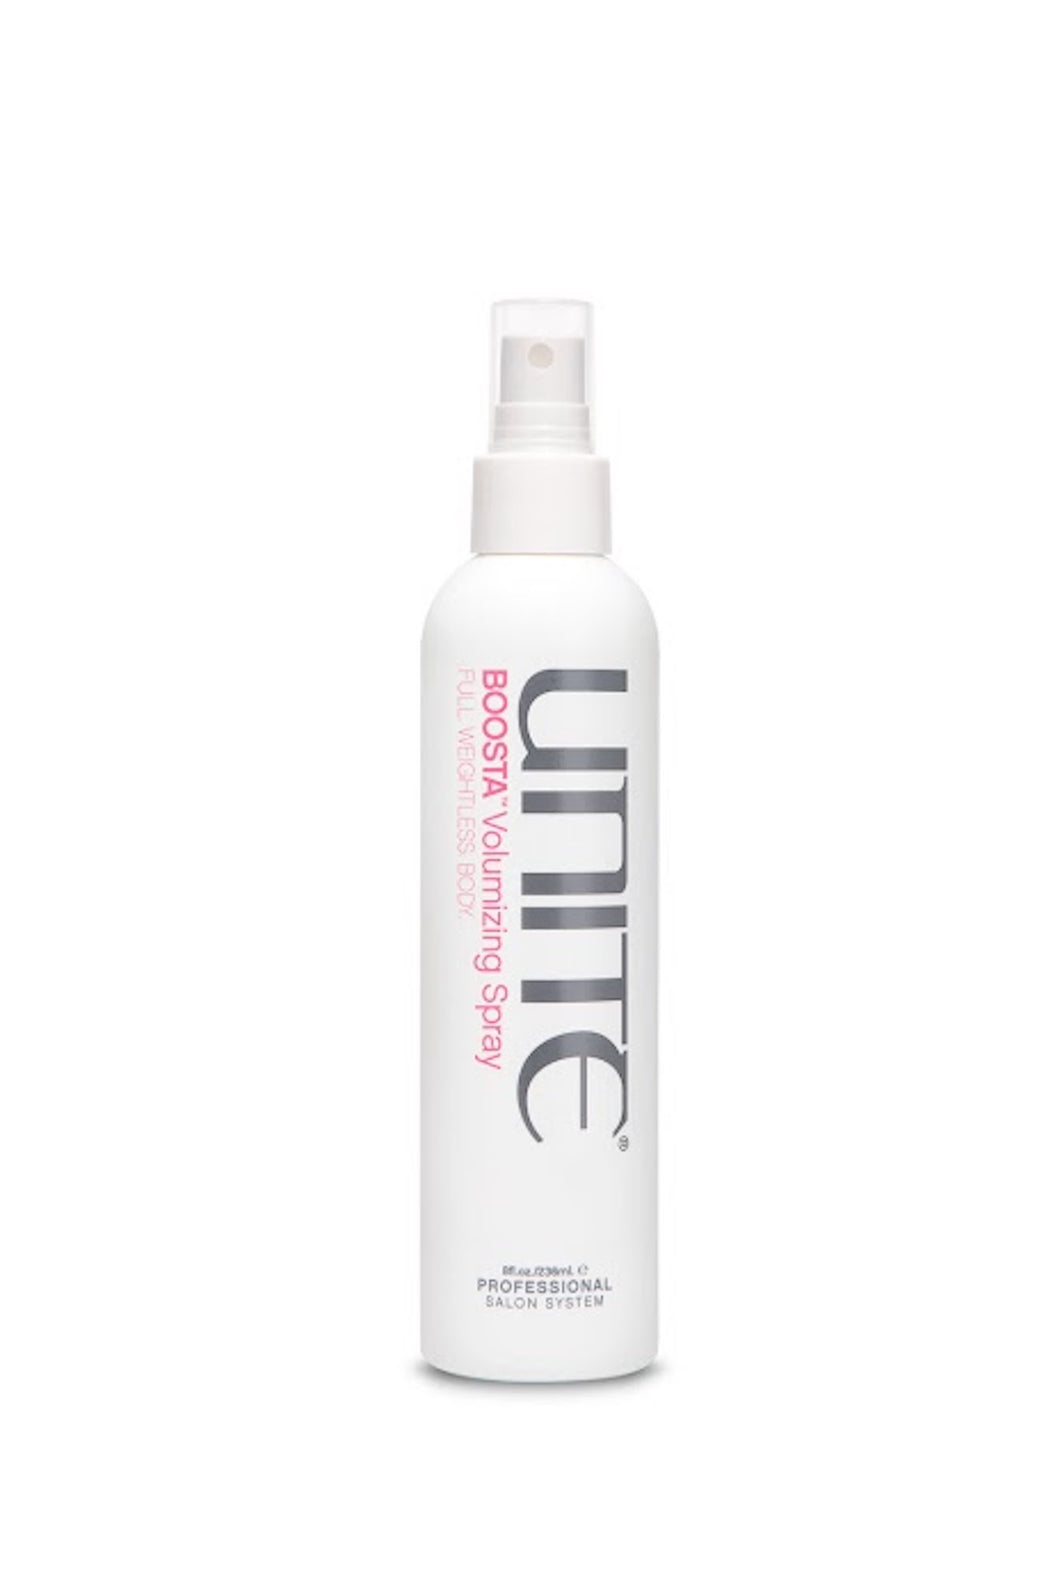 Unite - BOOSTA Volumizing Spray white non aerosol bottle with cear lid